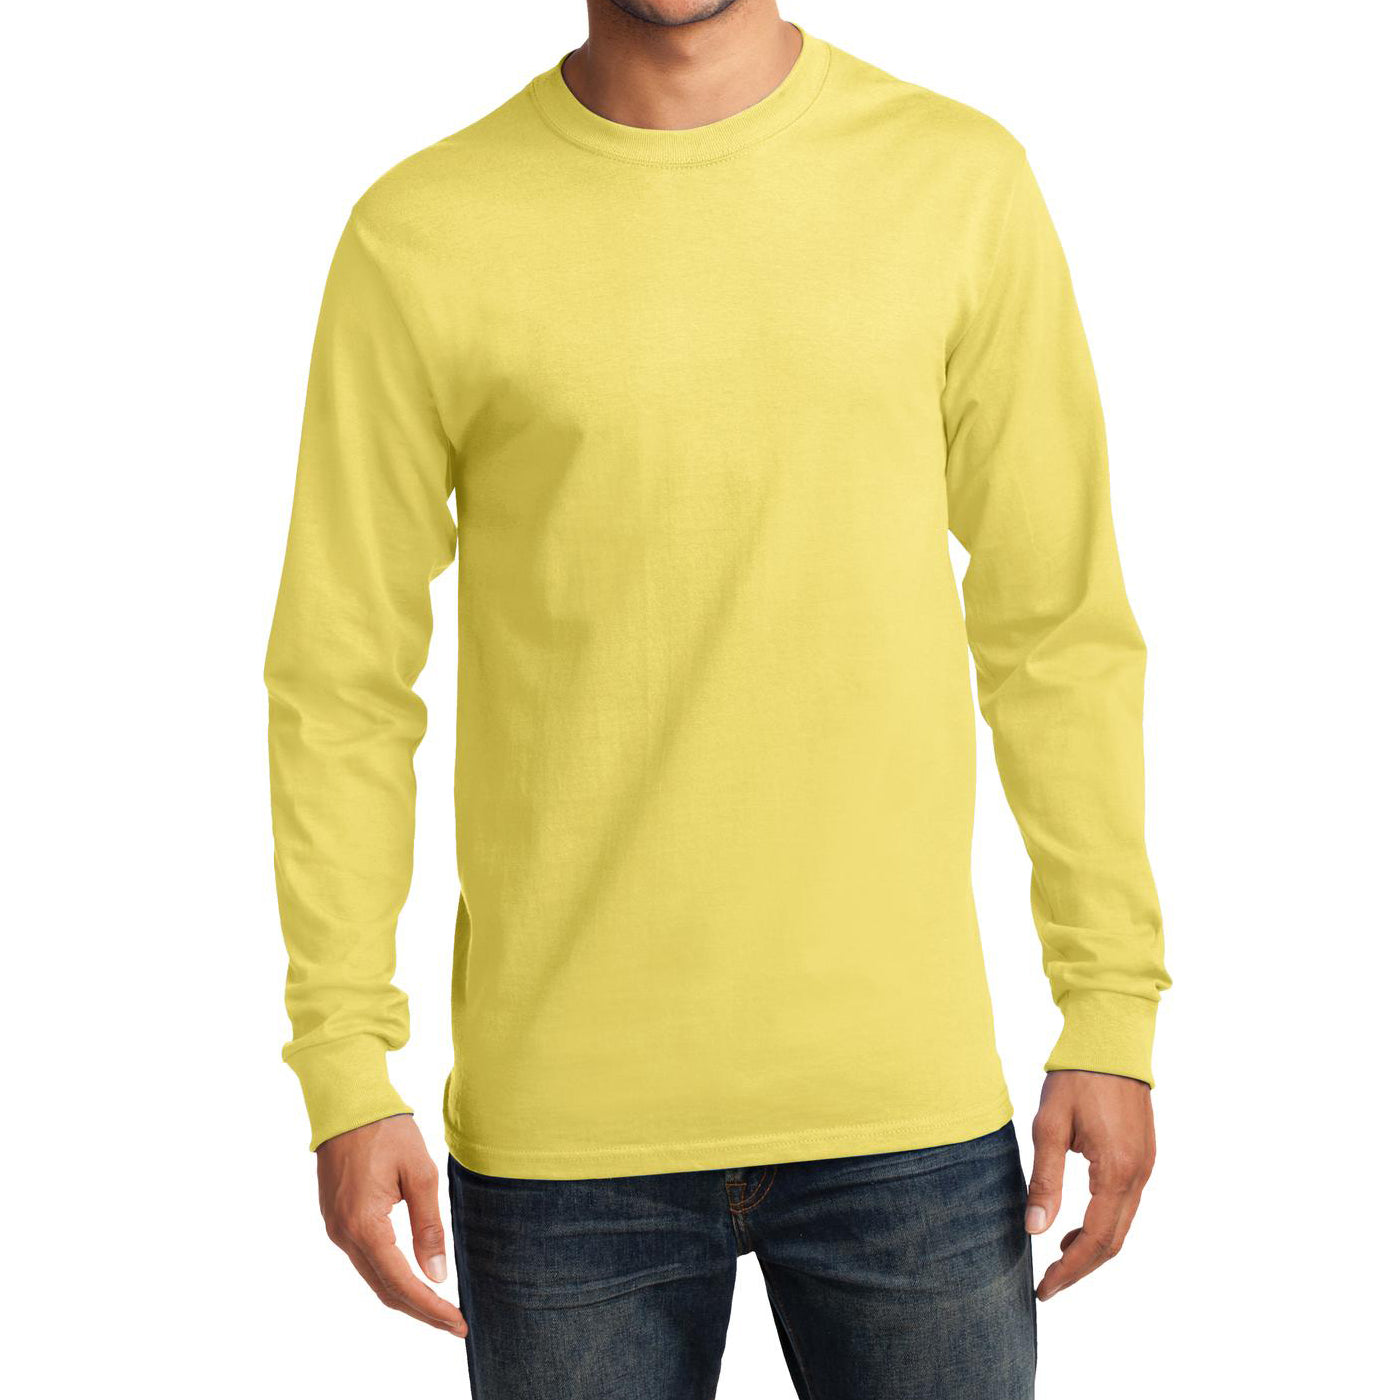 Men's Long Sleeve Essential Tee - Yellow - Front